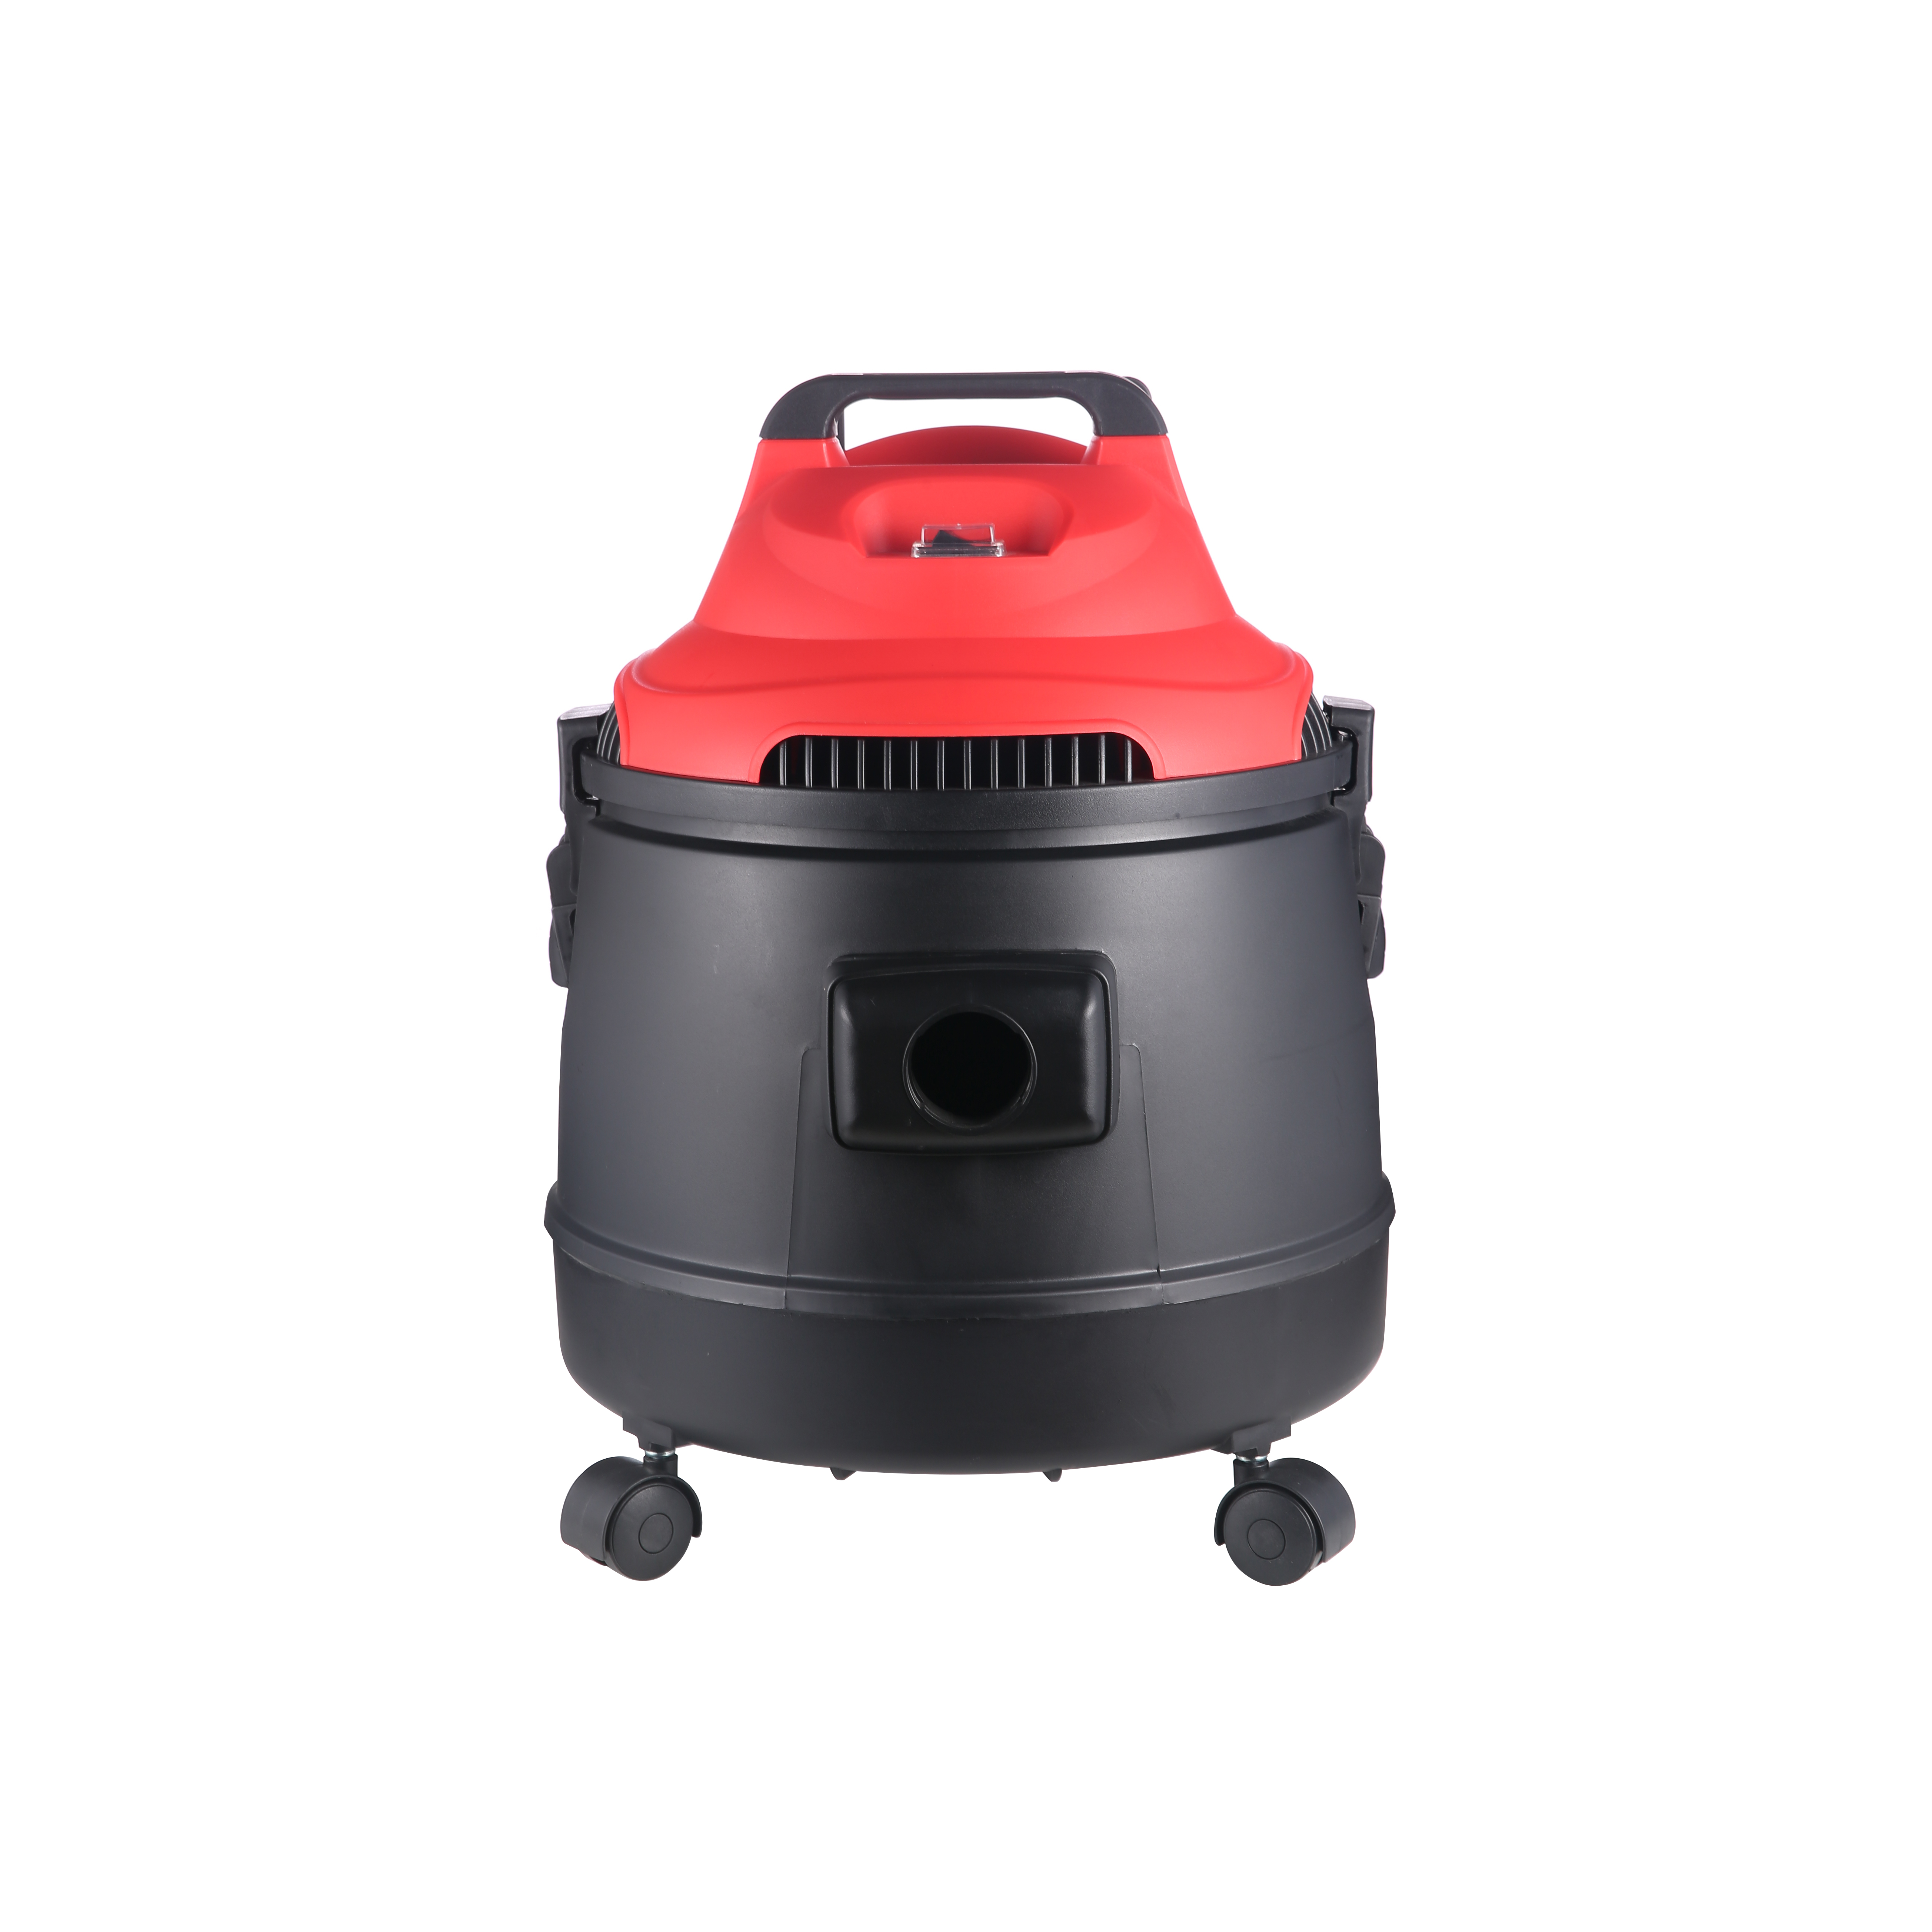 RL128 plastic tank wet dry blower portable vacuum cleaner